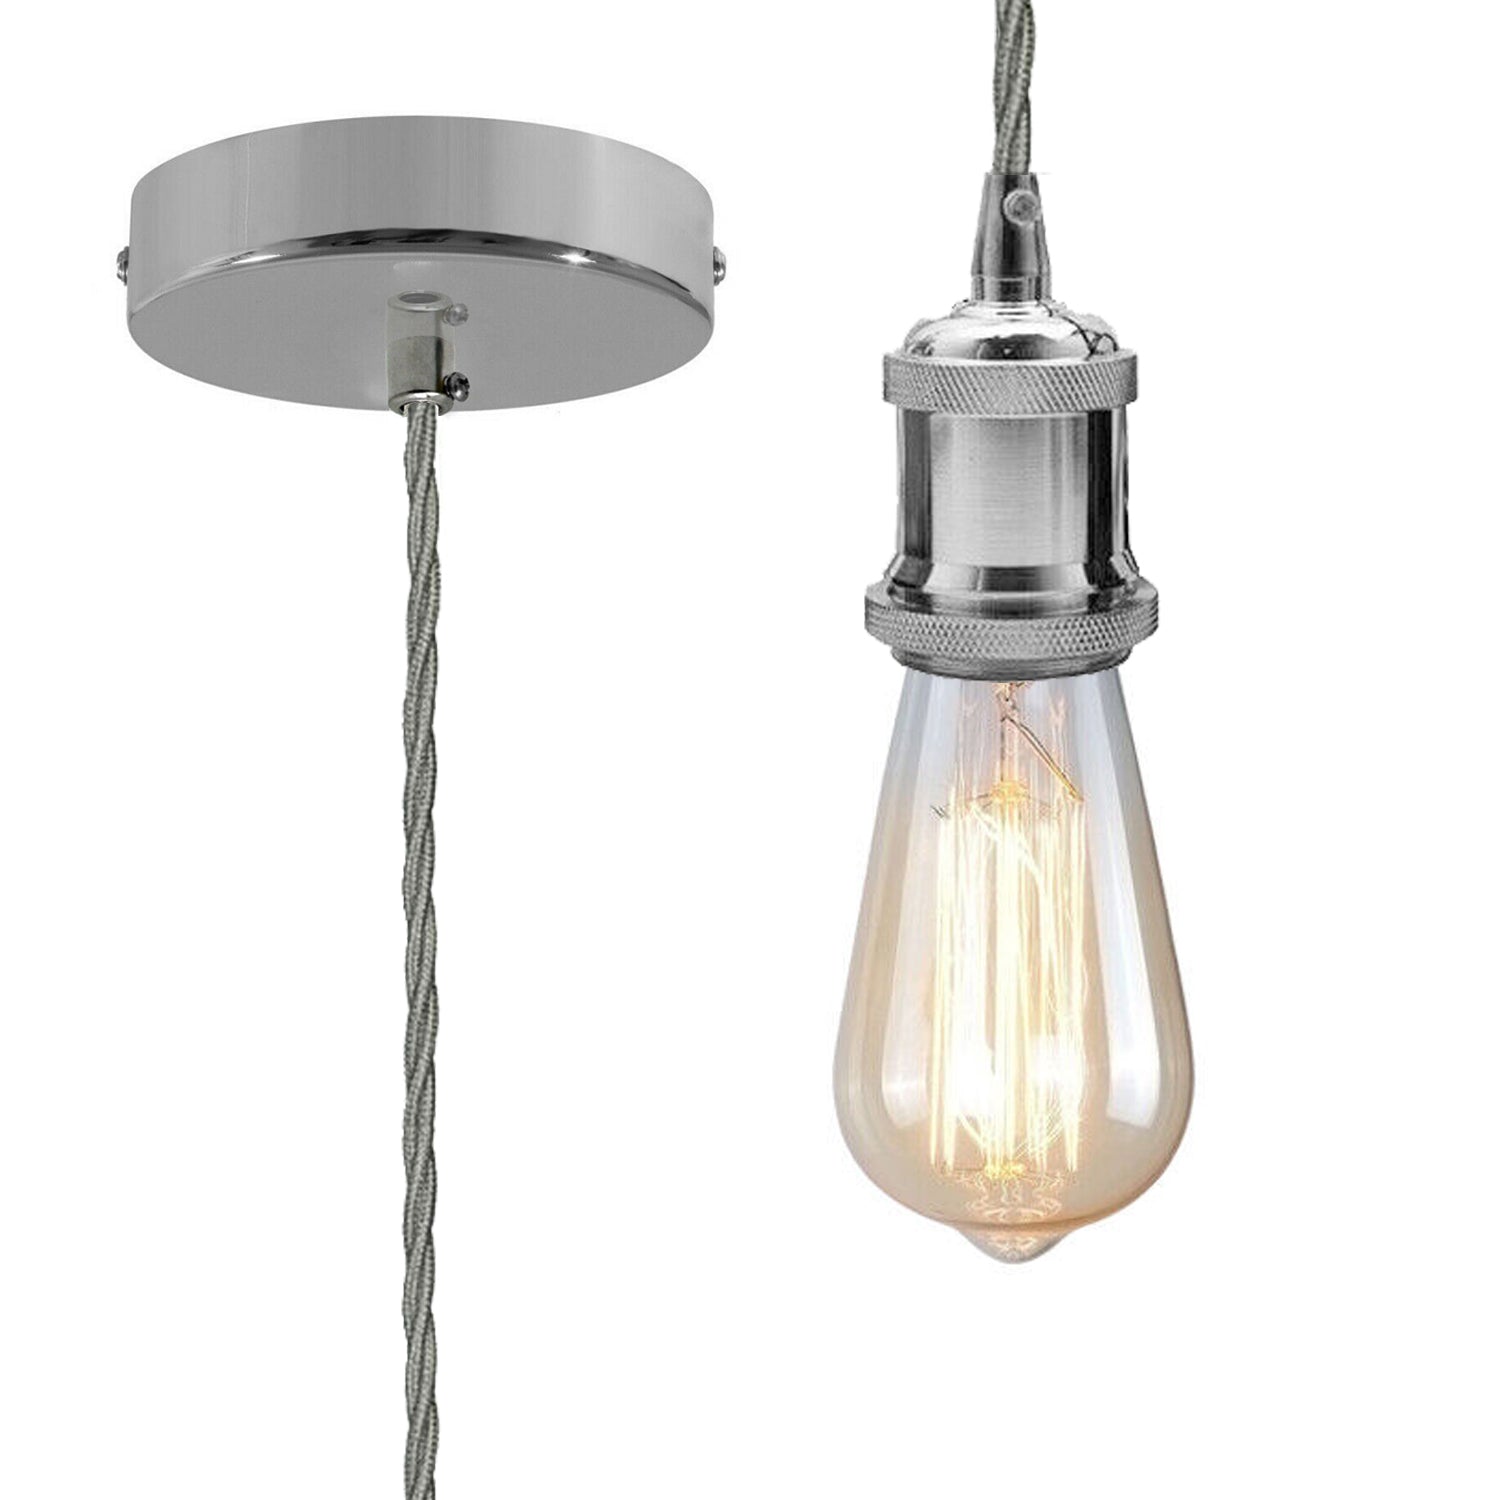 Chrome Vintage Metal Ceiling Light Fitting Grey Twisted Braided Flex 2m E27 Lamp Holder Suspended Pendant Light Fitting Kit for Indoor Lightings